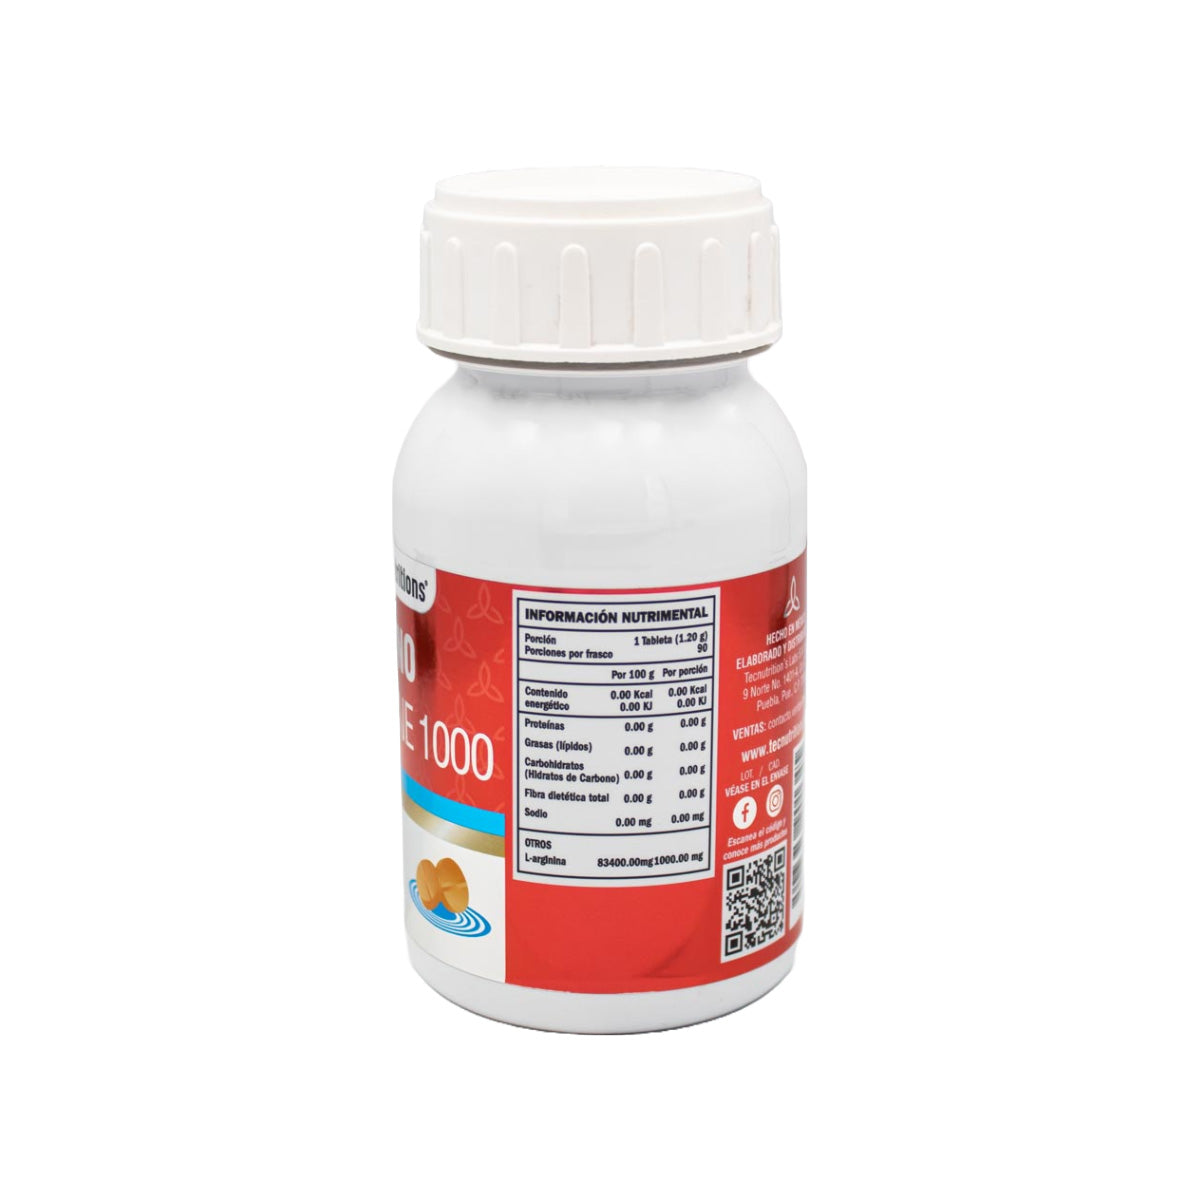 Food supplement with amino acids, Tecno L-Arginine 1000, 60 tabl